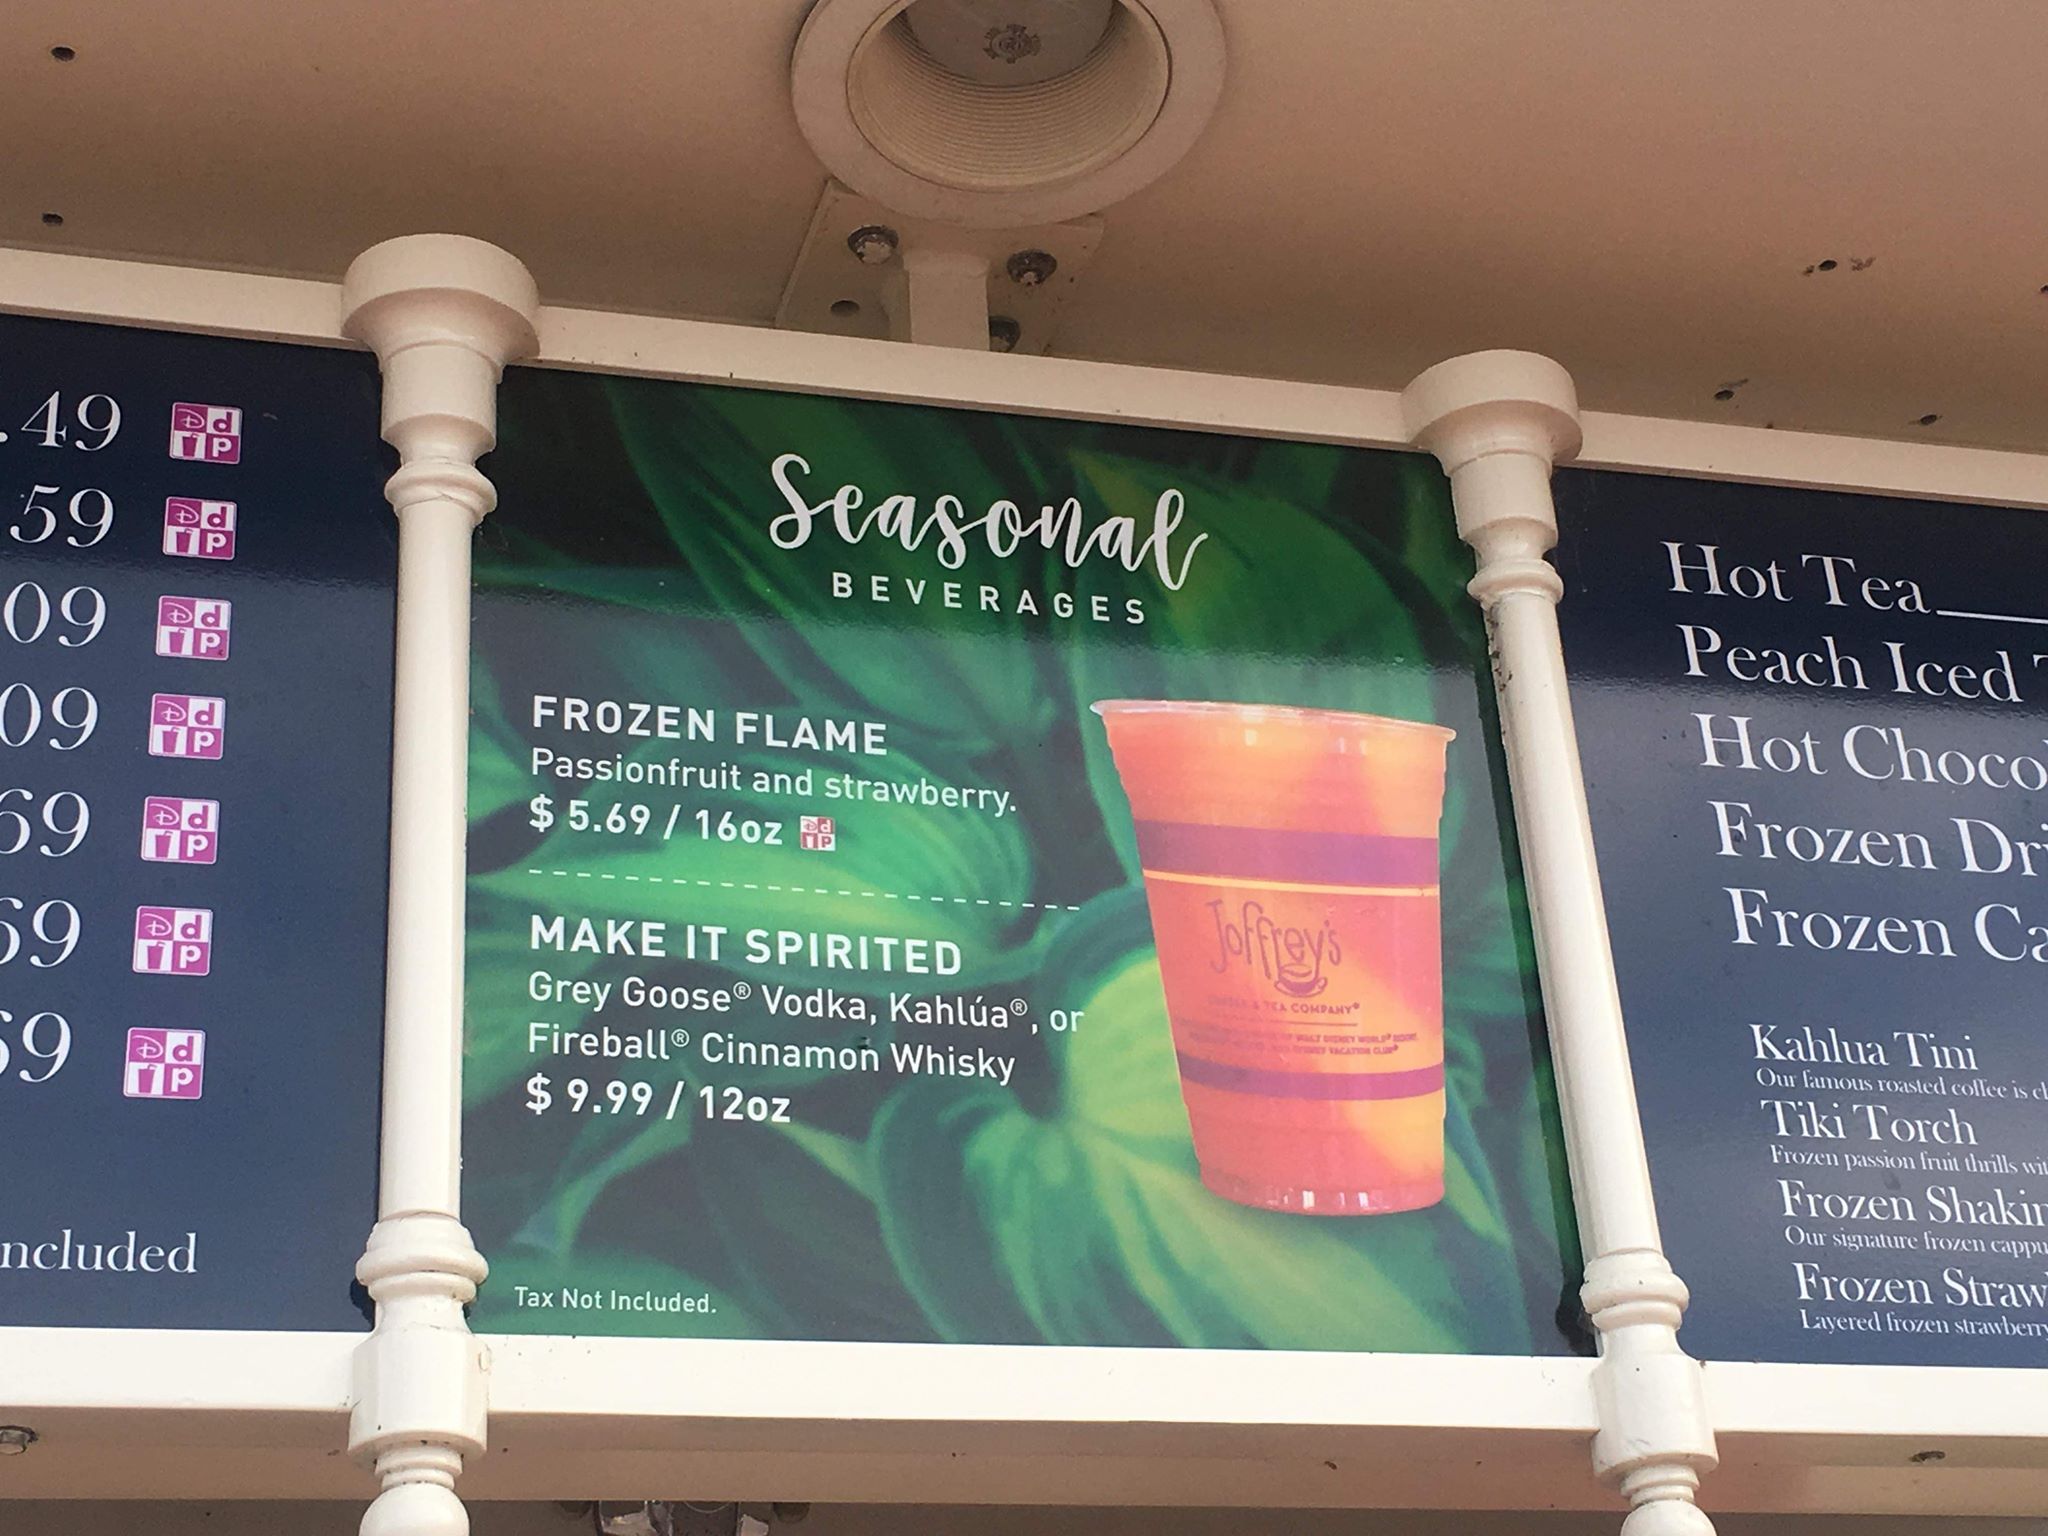 New Seasonal Drinks at Joffrey’s Kiosk in Epcot